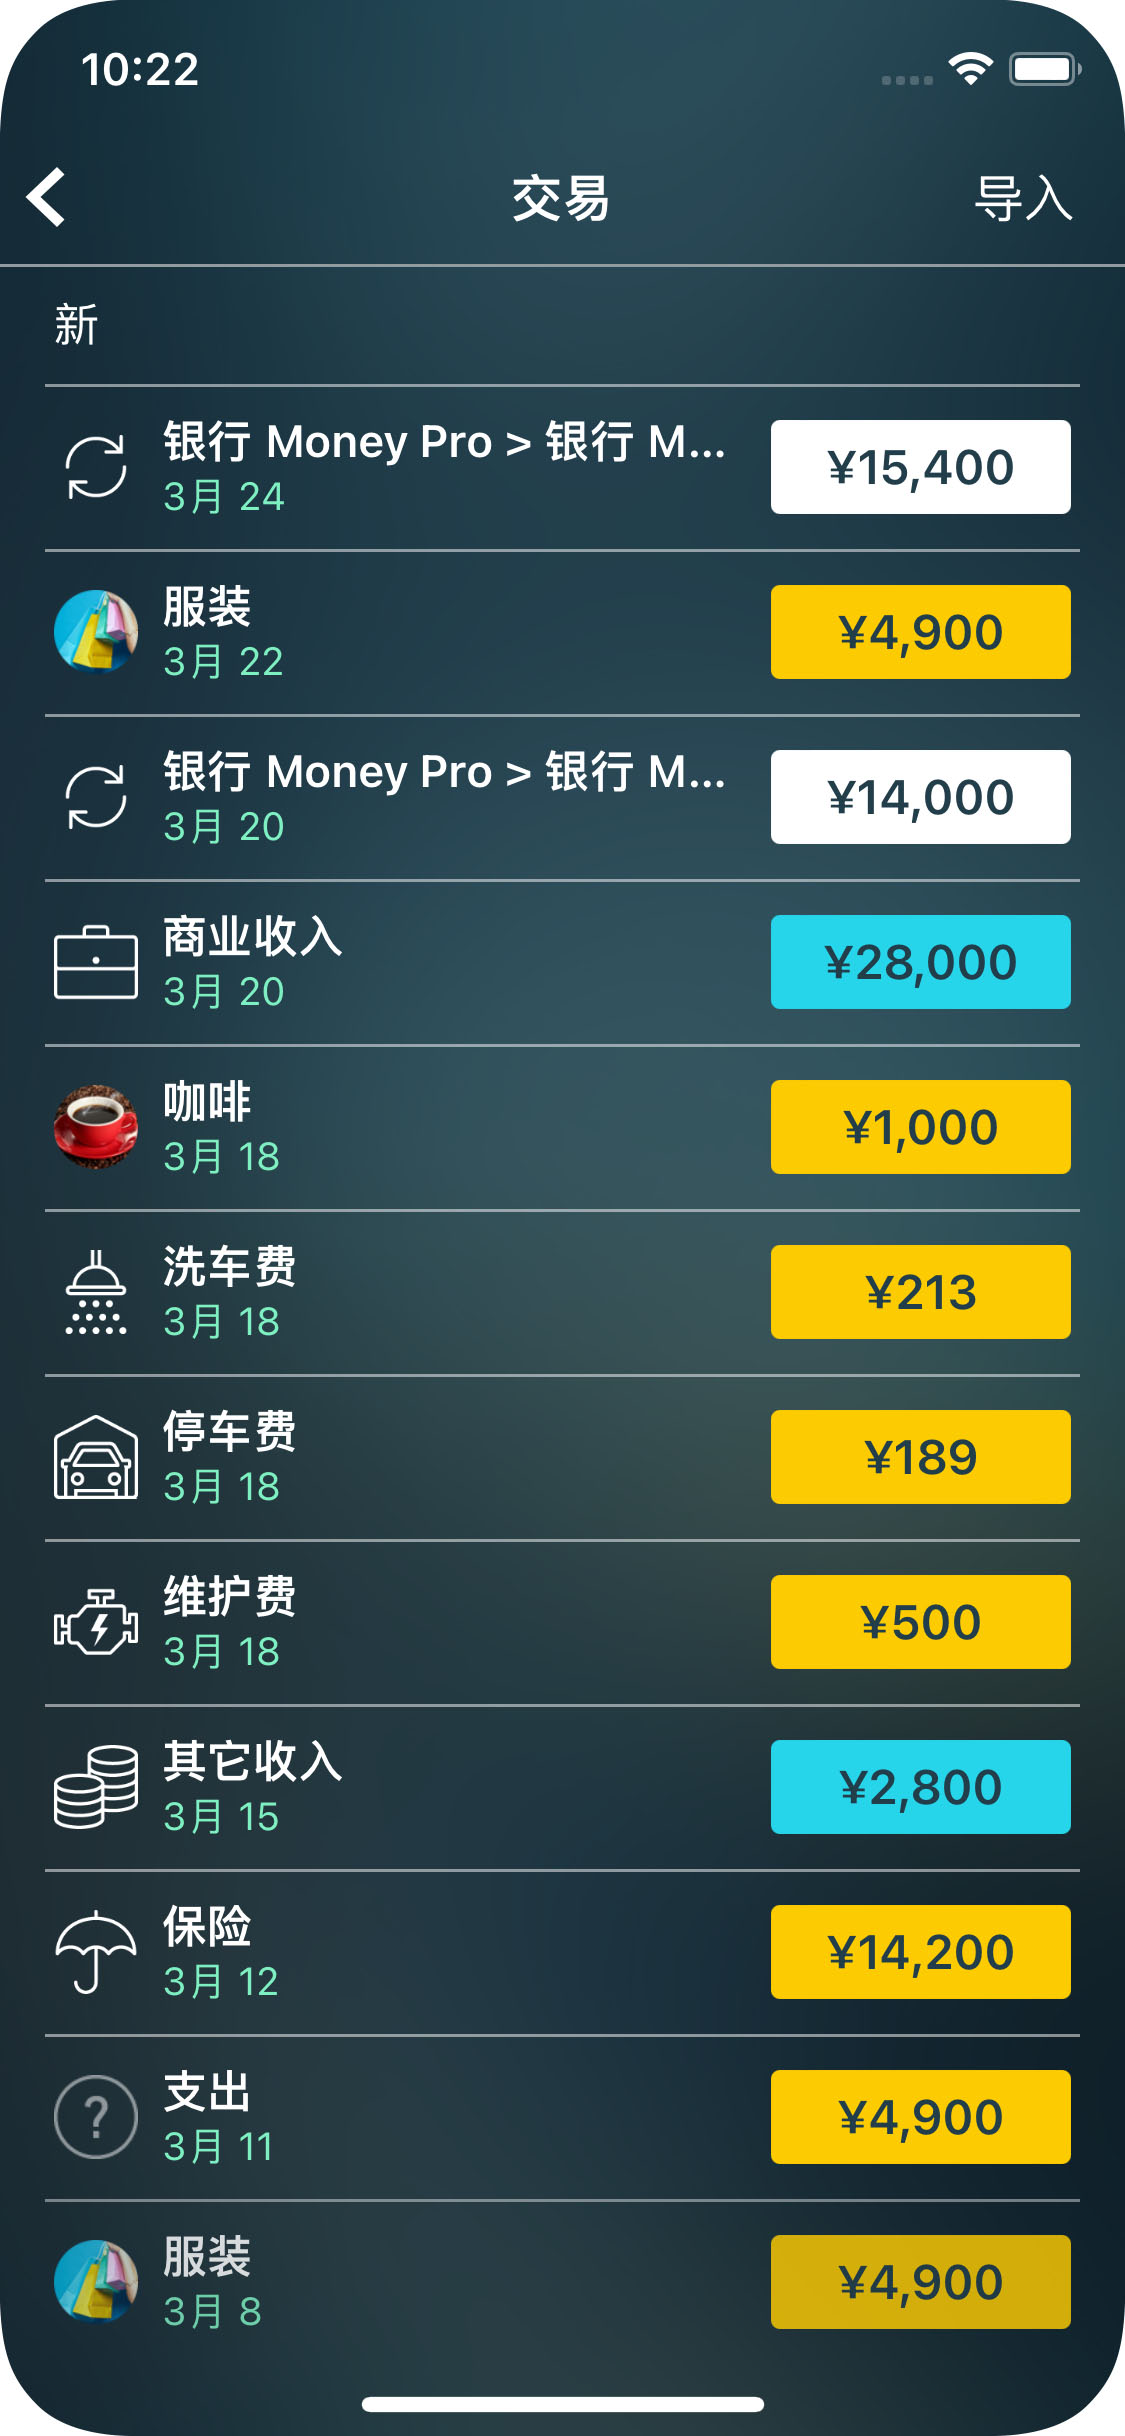 Money Pro - OFX, CSV 导入 - iPhone